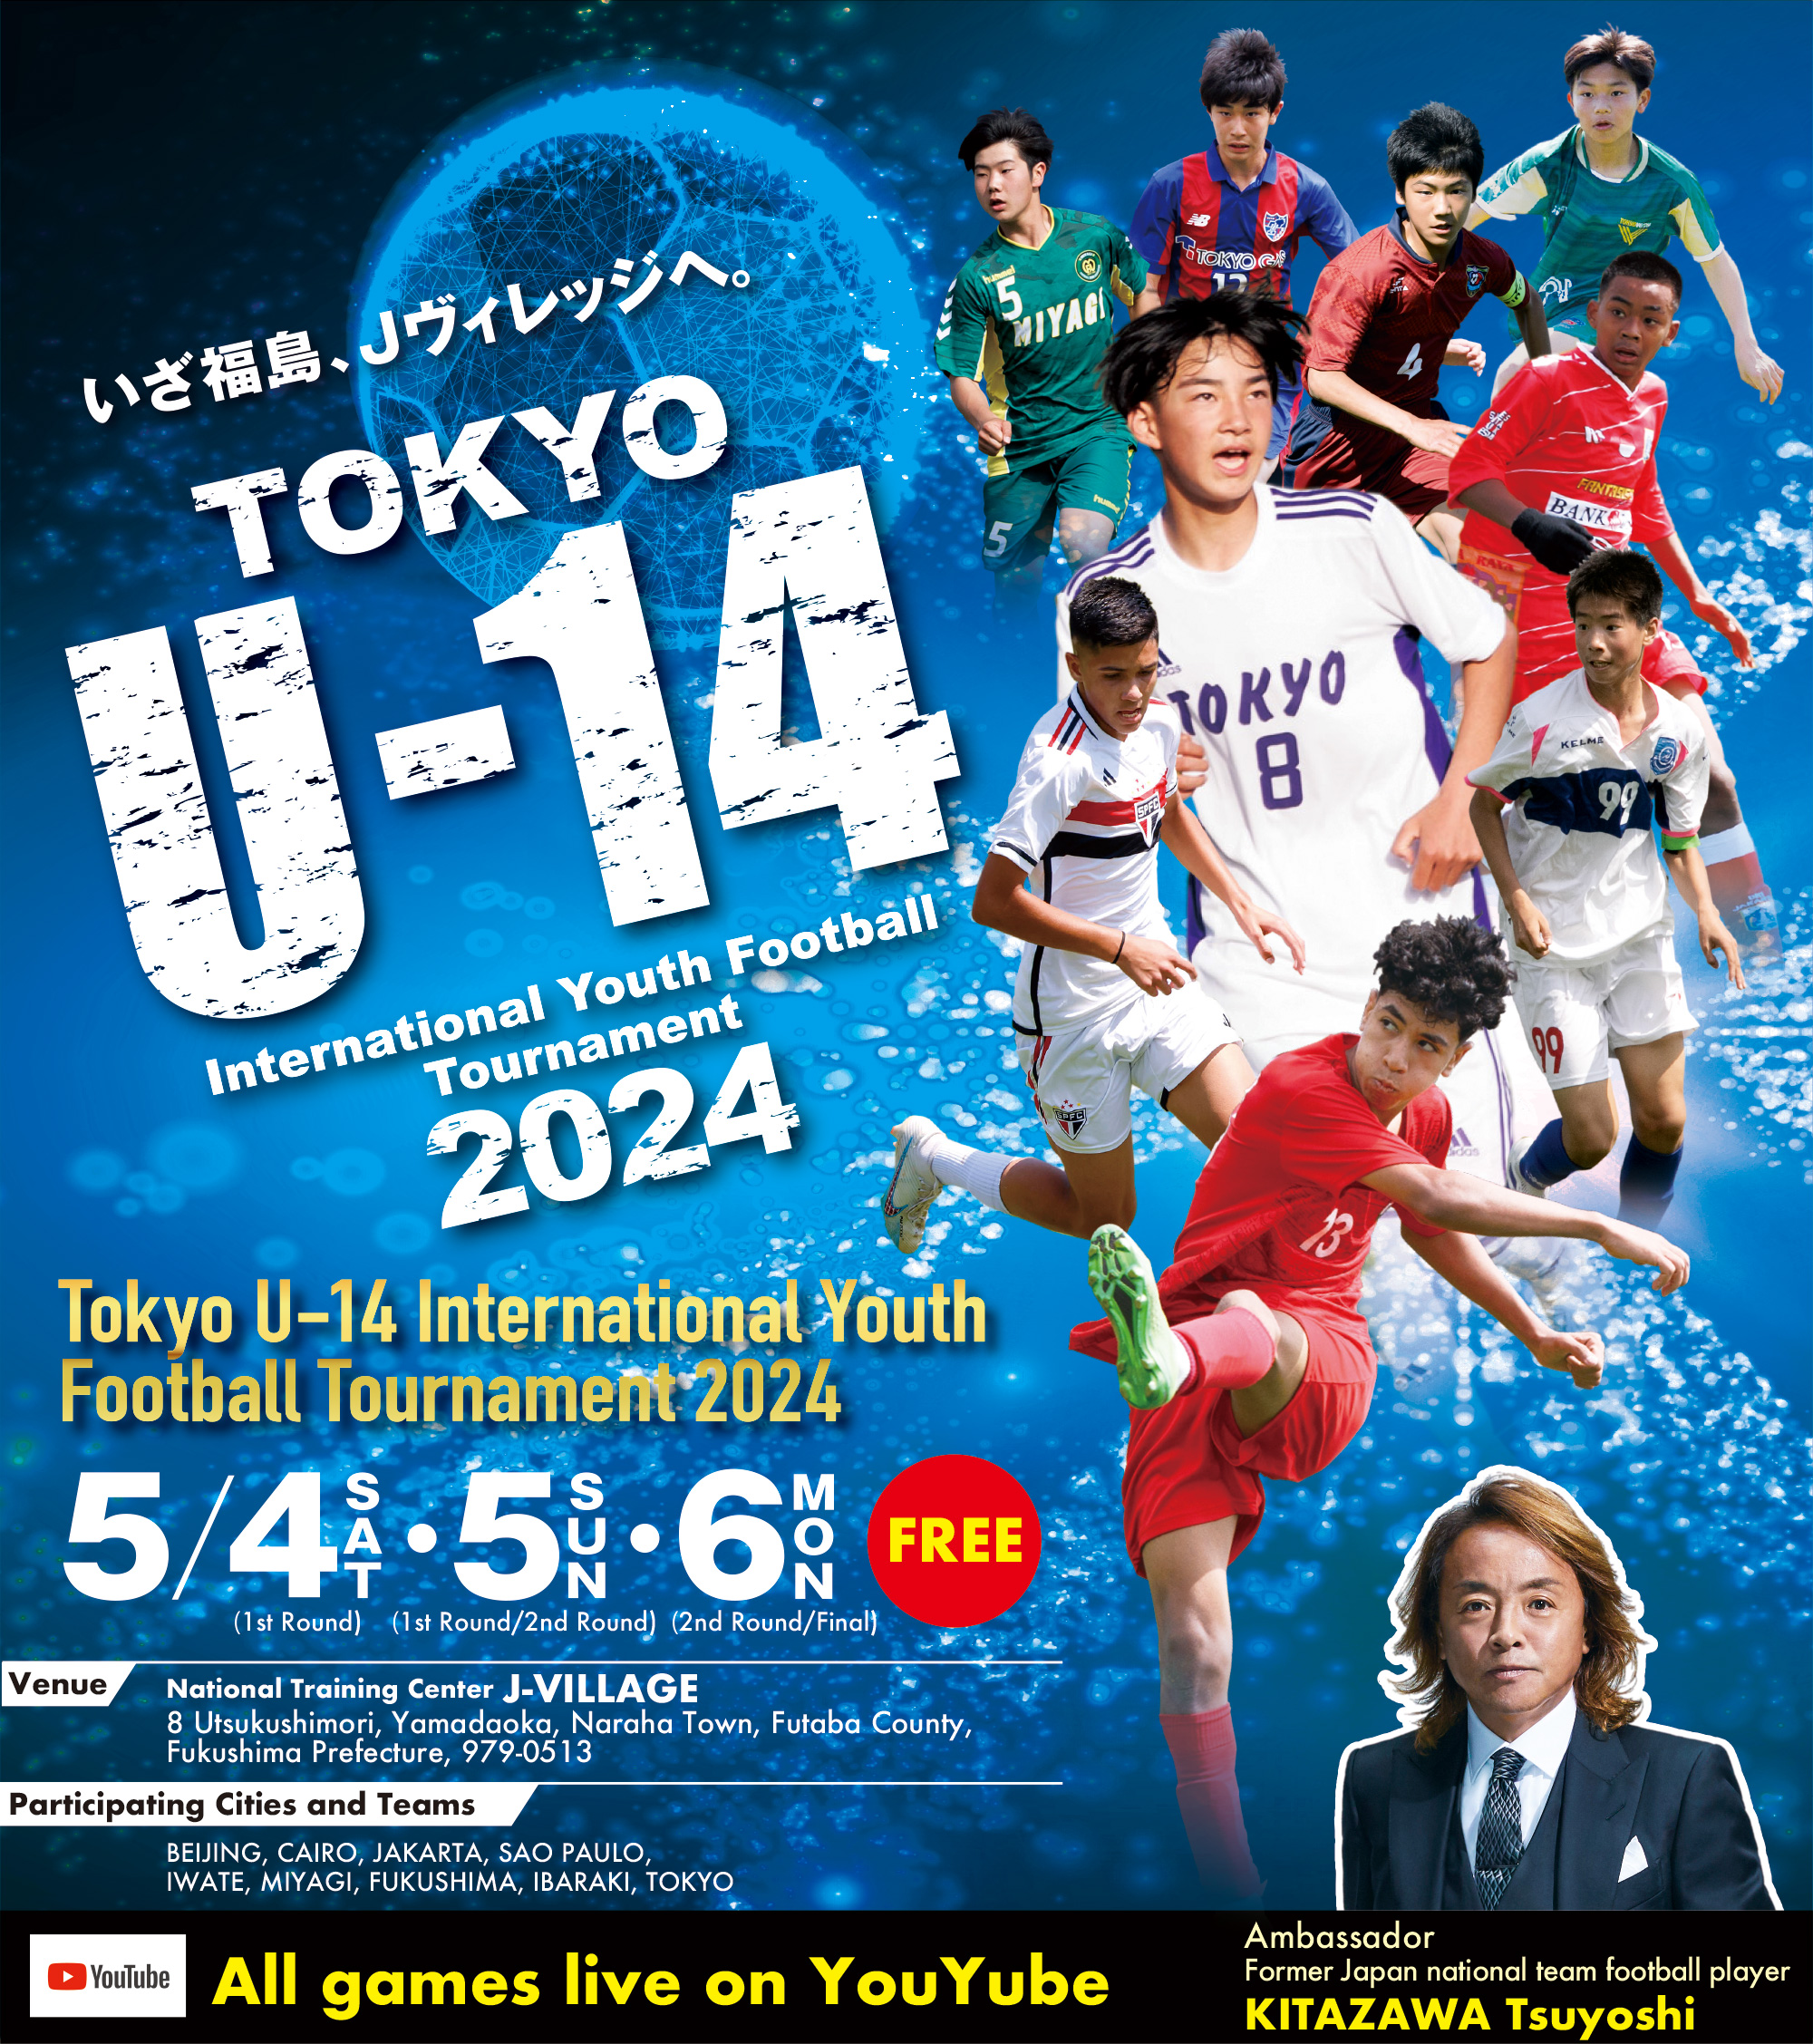 Tokyo U-14 International Youth Football Tournament 2024